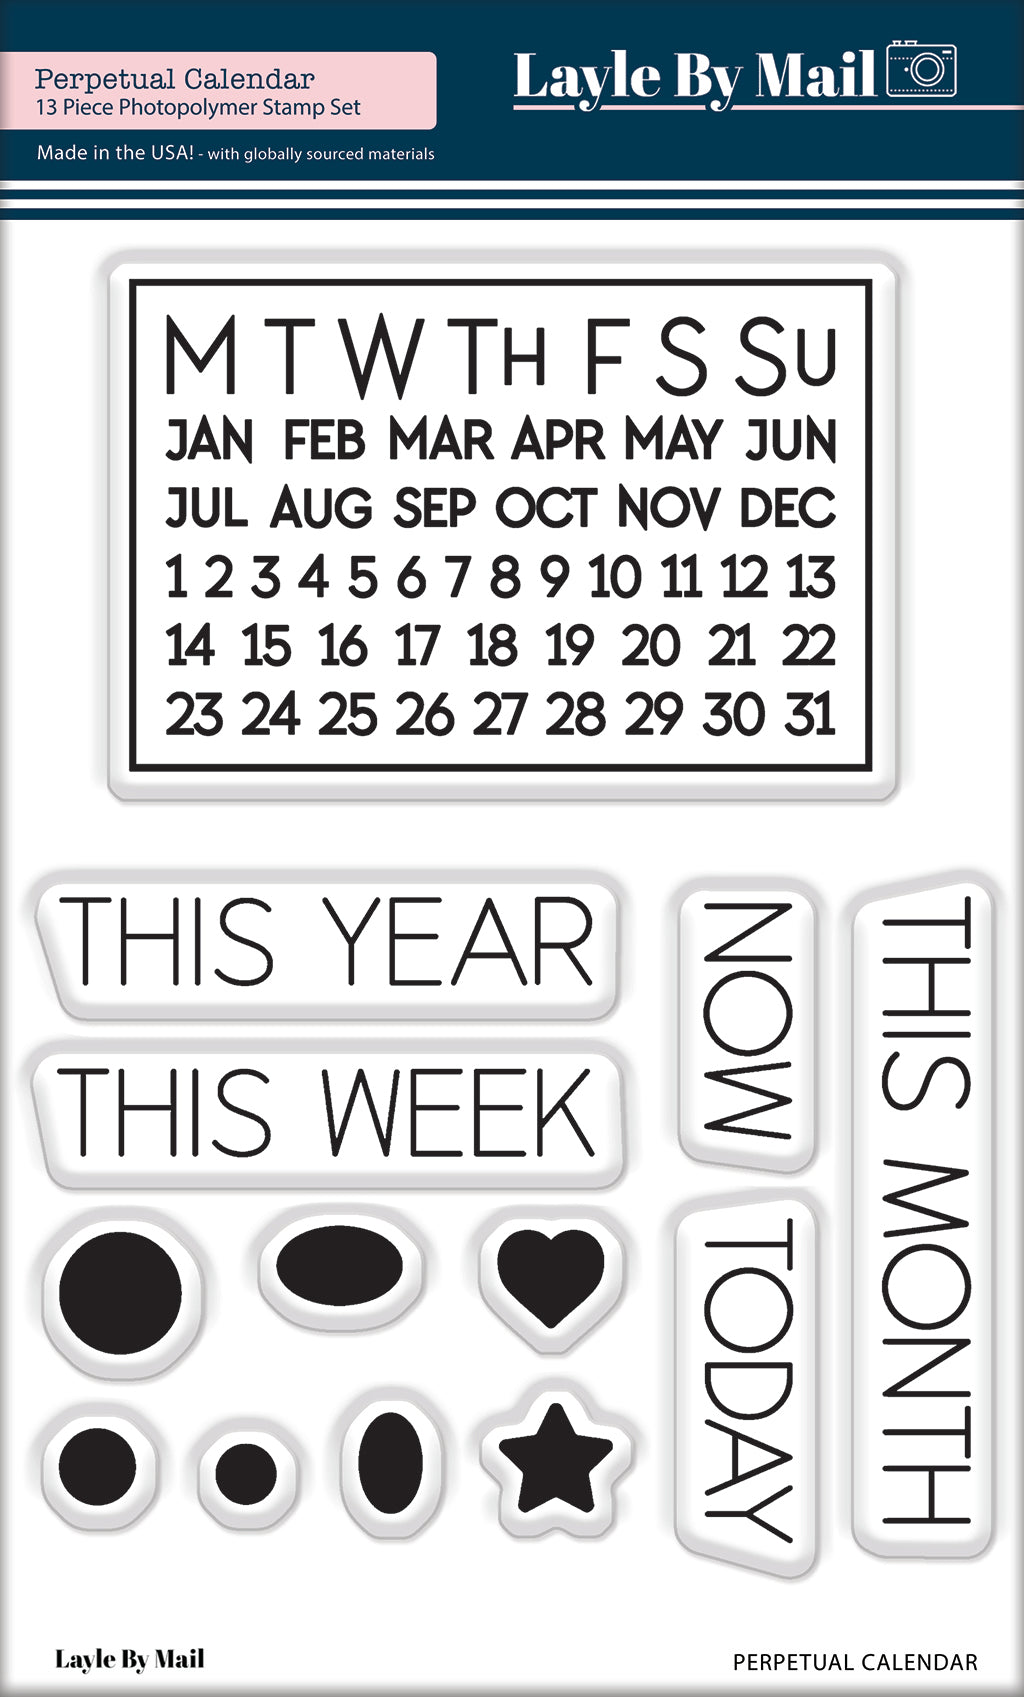 Perpetual Calendar Journal Stamp - Simply Stamps